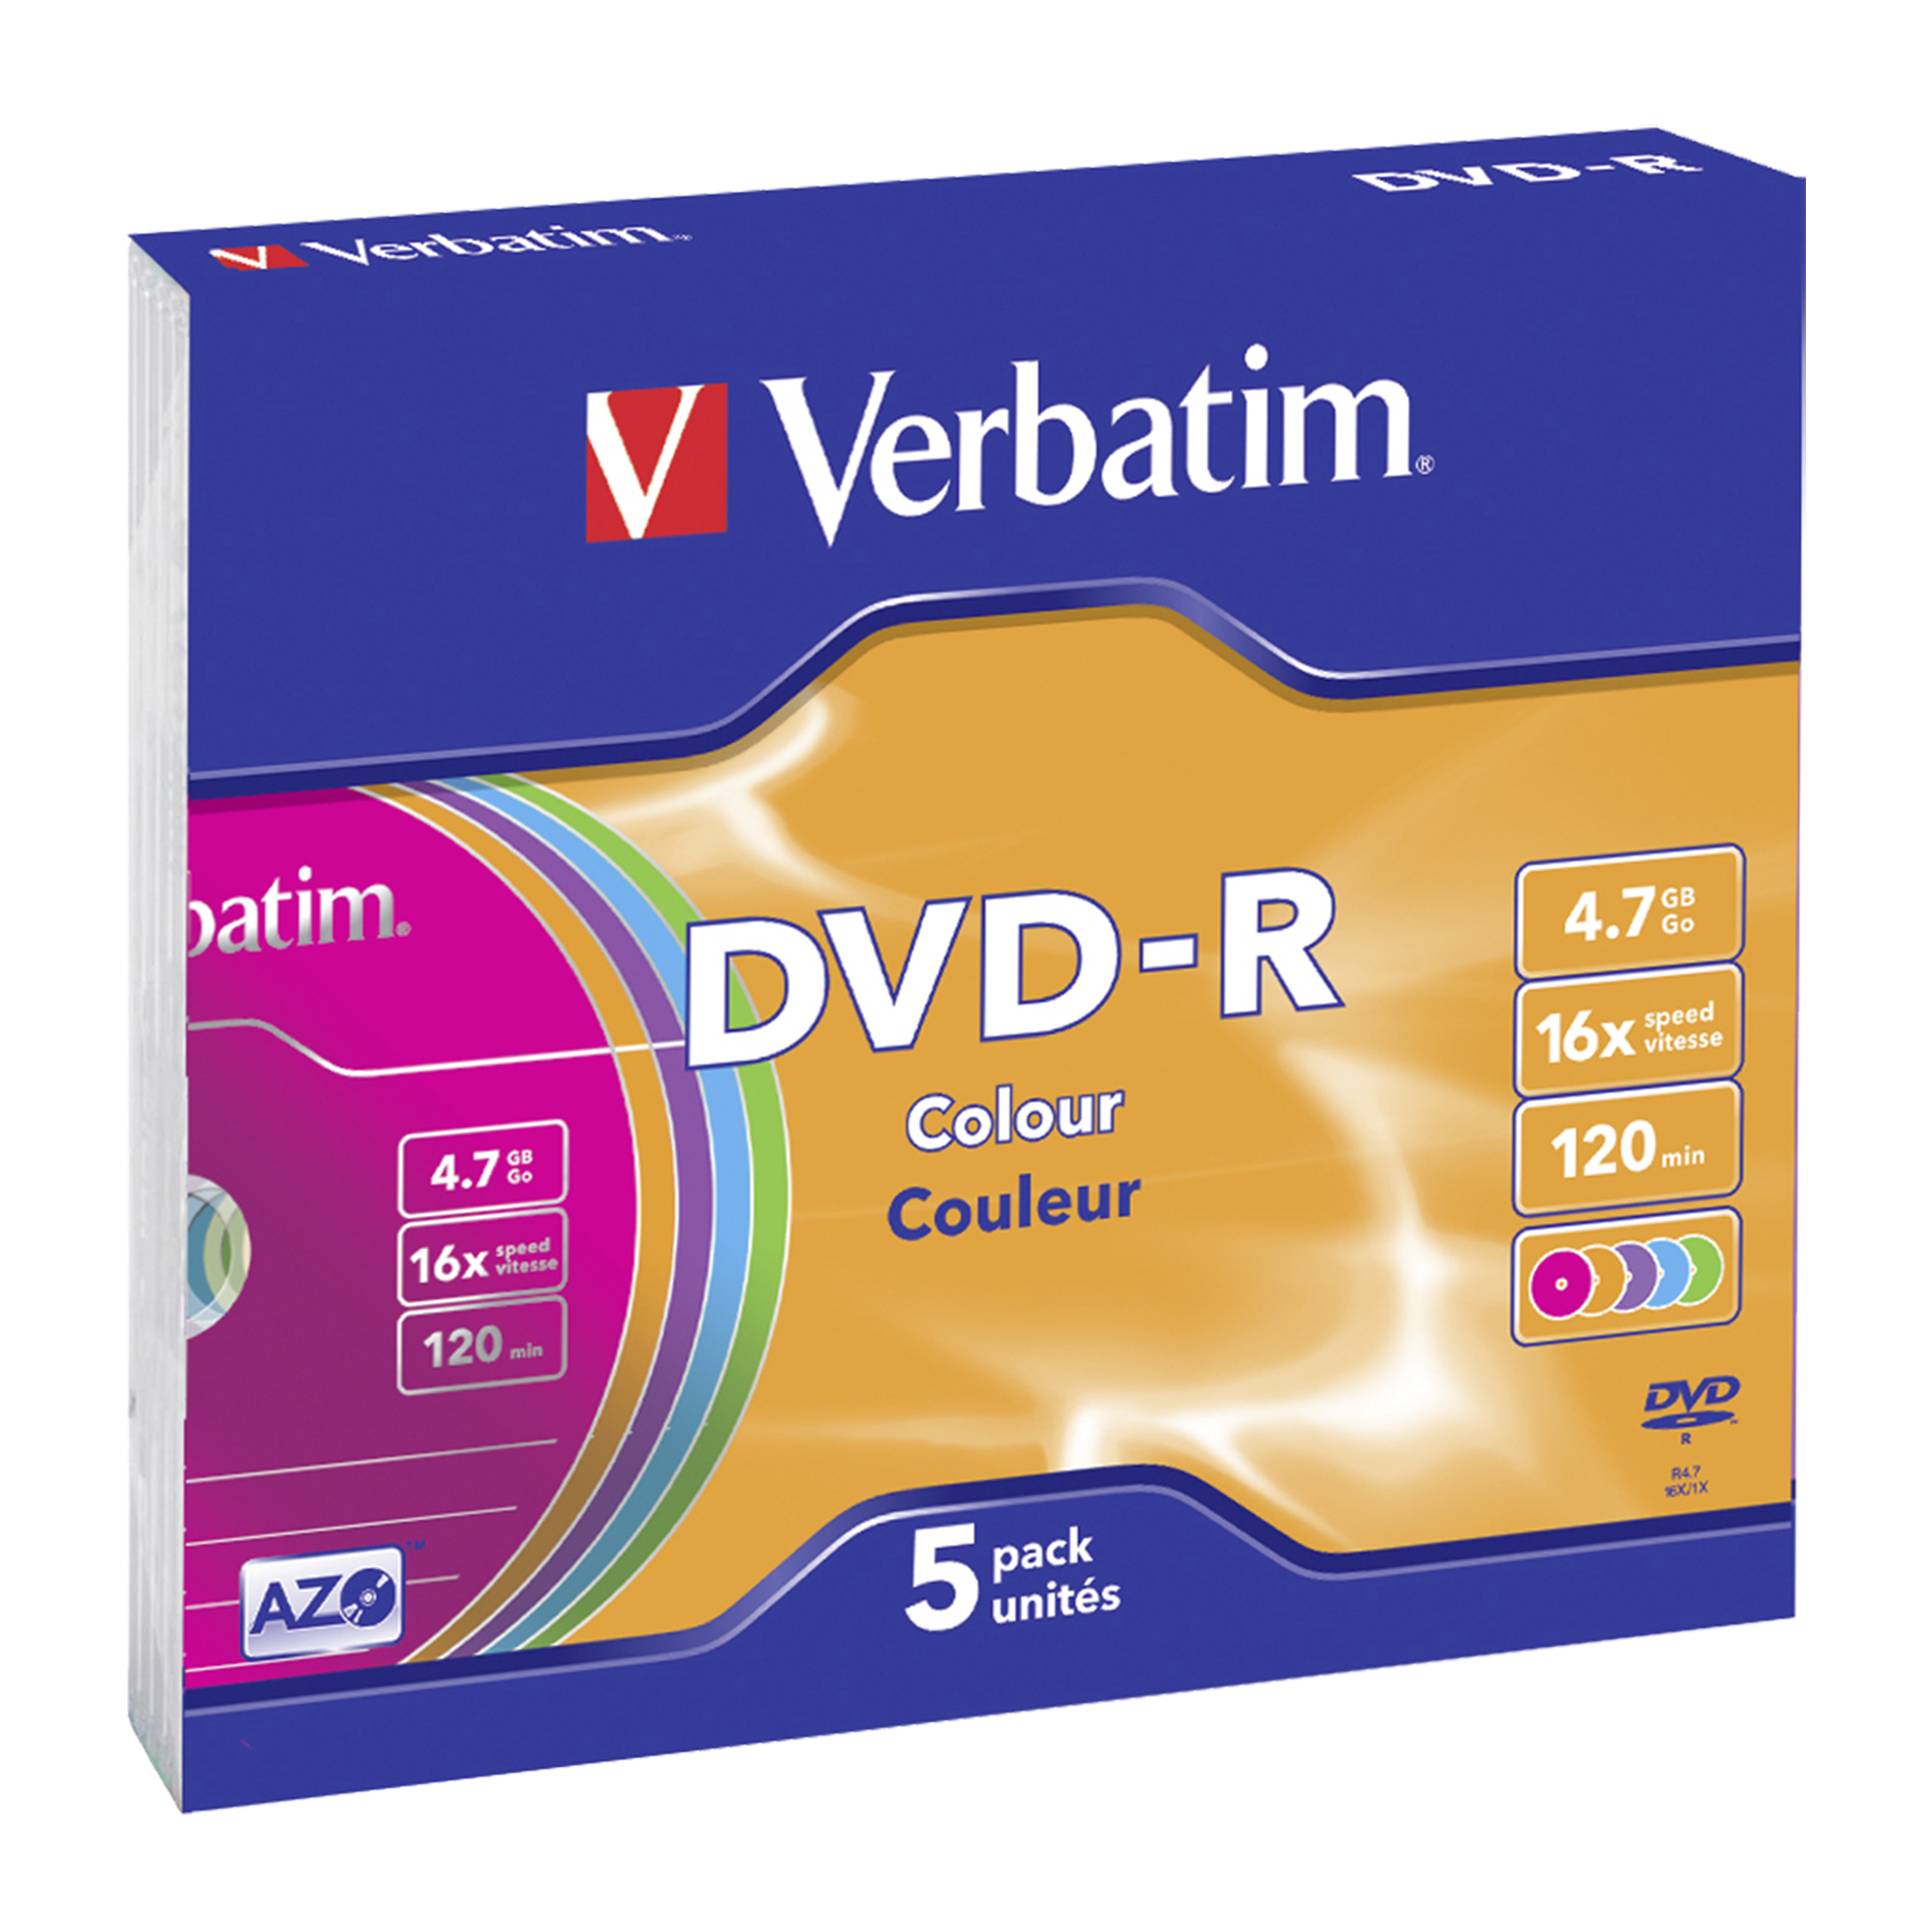 1x5 Verbatim DVD-R 4,7GB Colour 16x Speed, Slim custodia